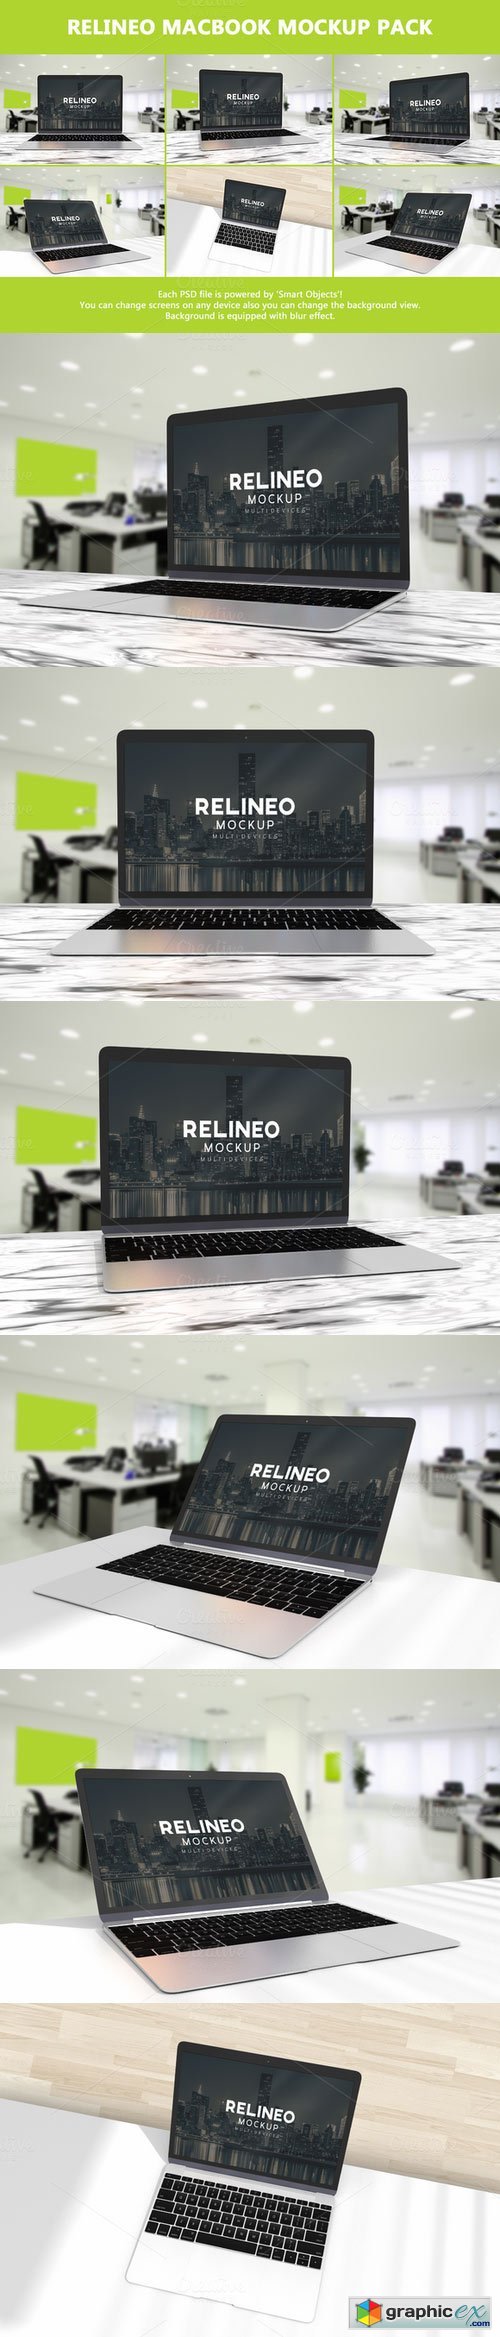 Relineo Macbook Mockup Pack - #1